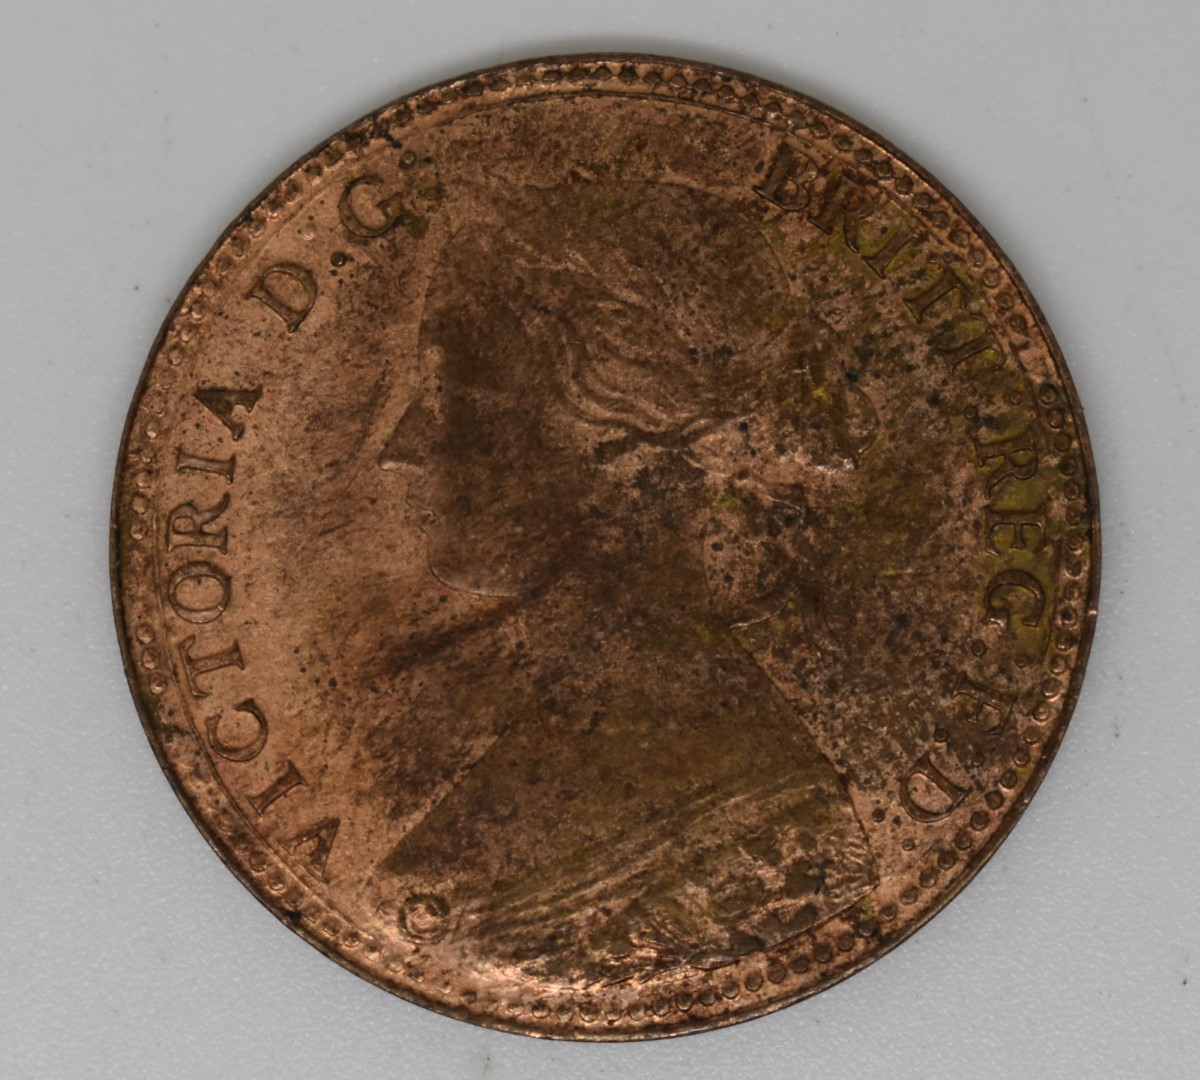 Queen Victoria 1860 young head bronze halfpenny, beaded borders, EF with lustre - Image 2 of 2